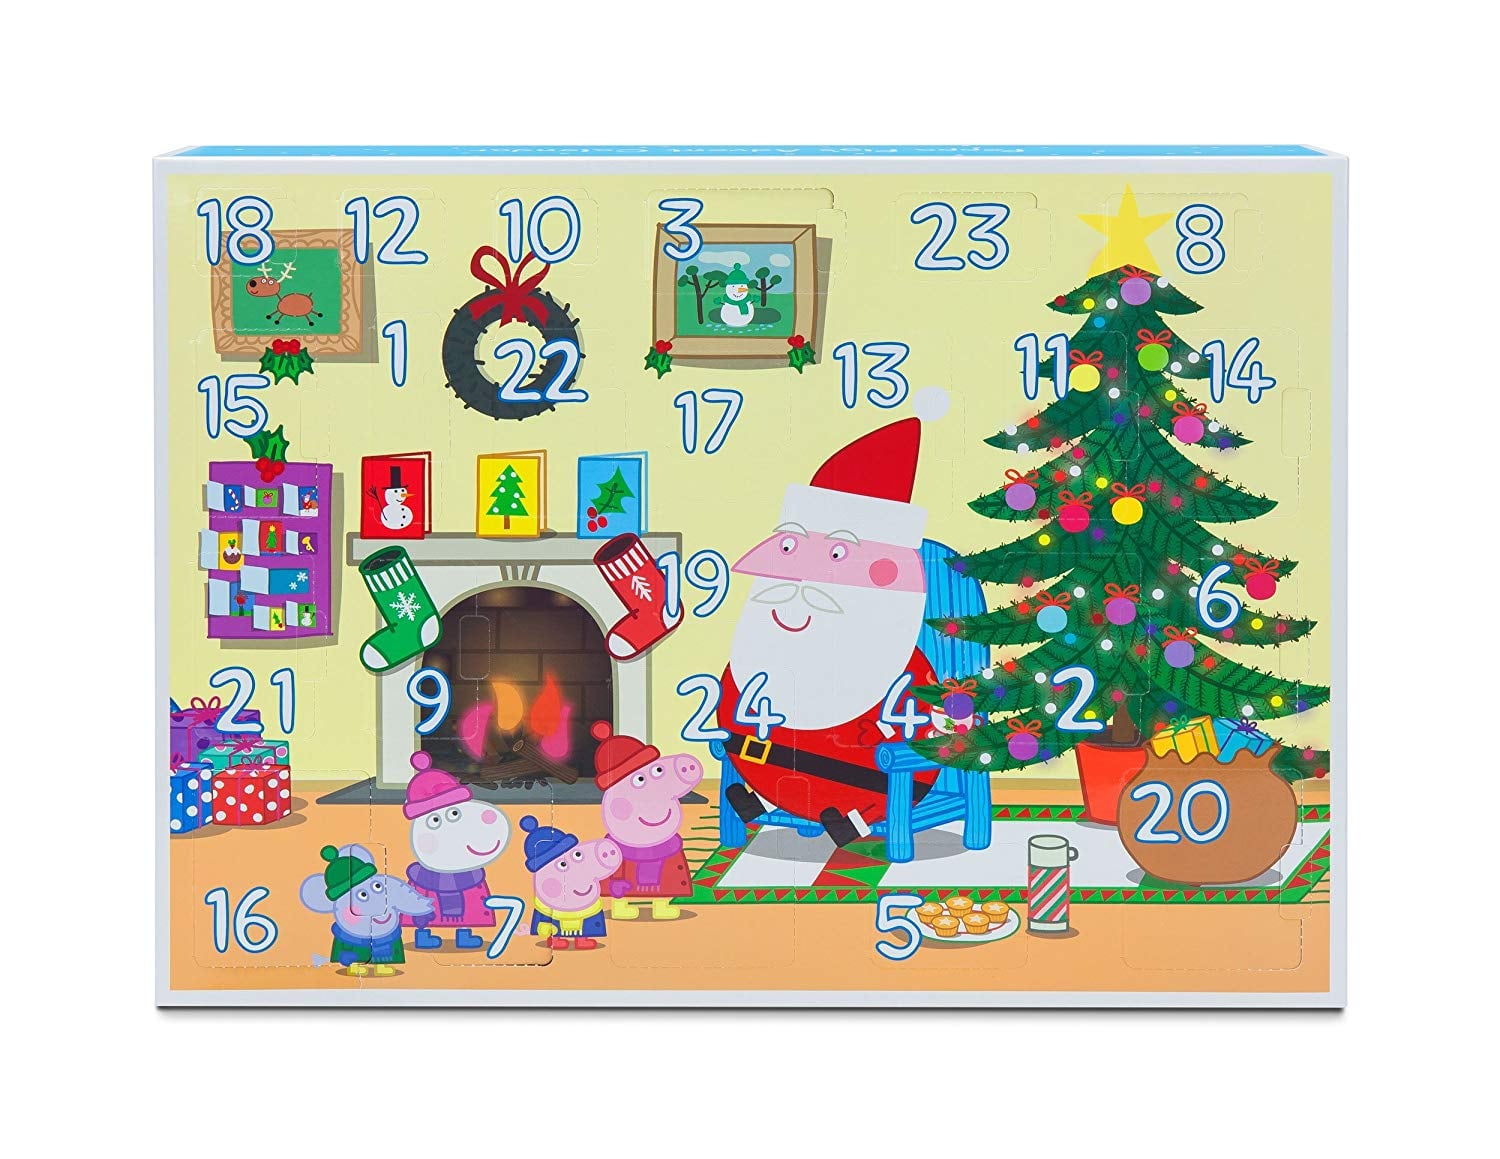 Peppa pig advent calendar